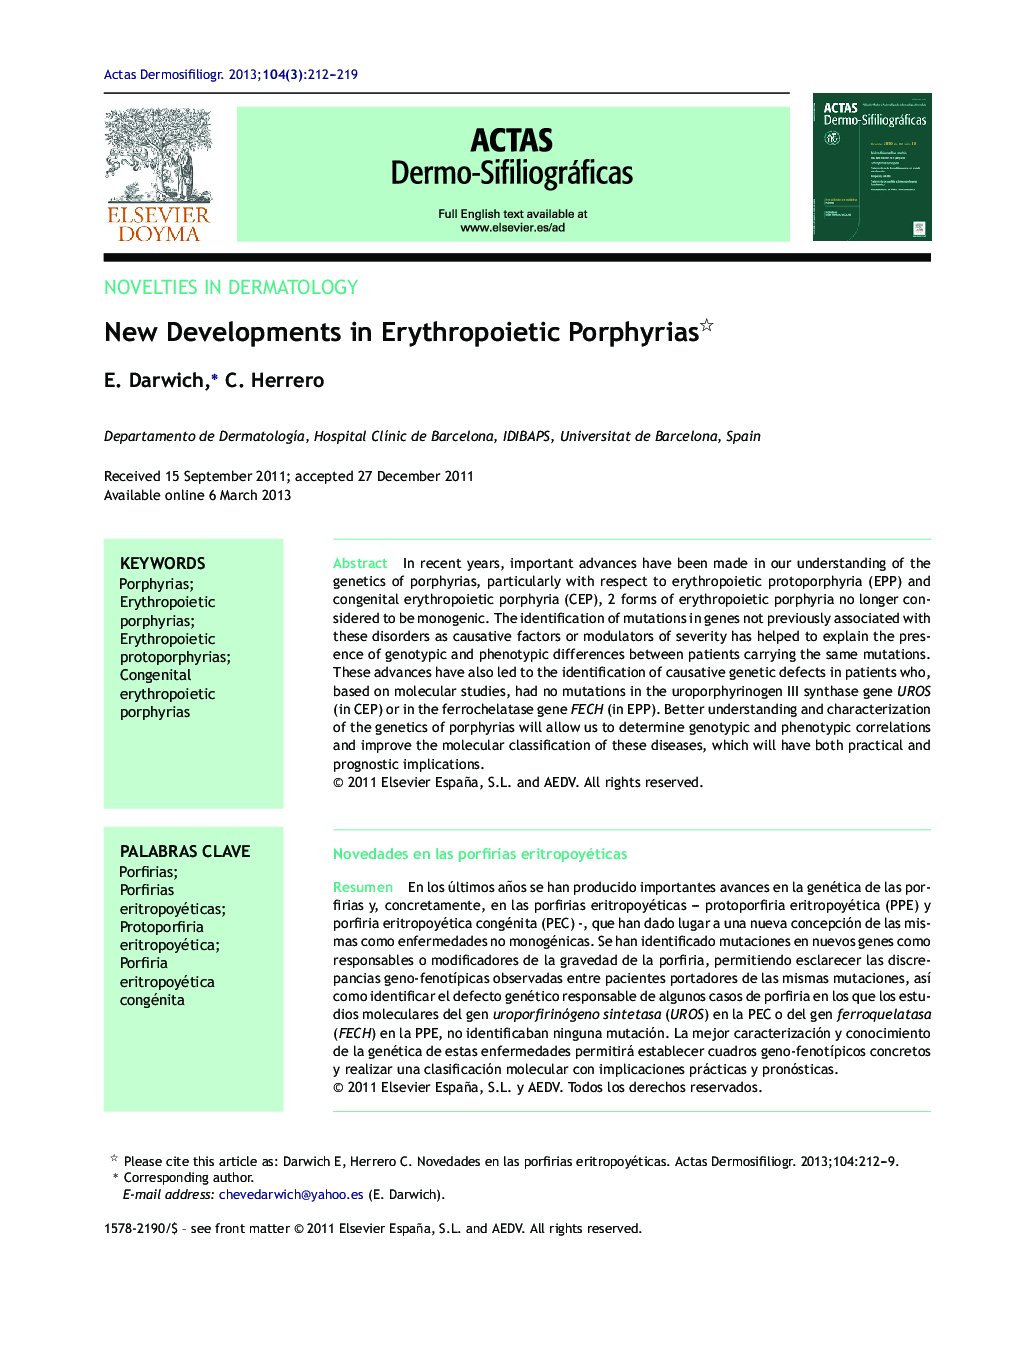 New Developments in Erythropoietic Porphyrias 